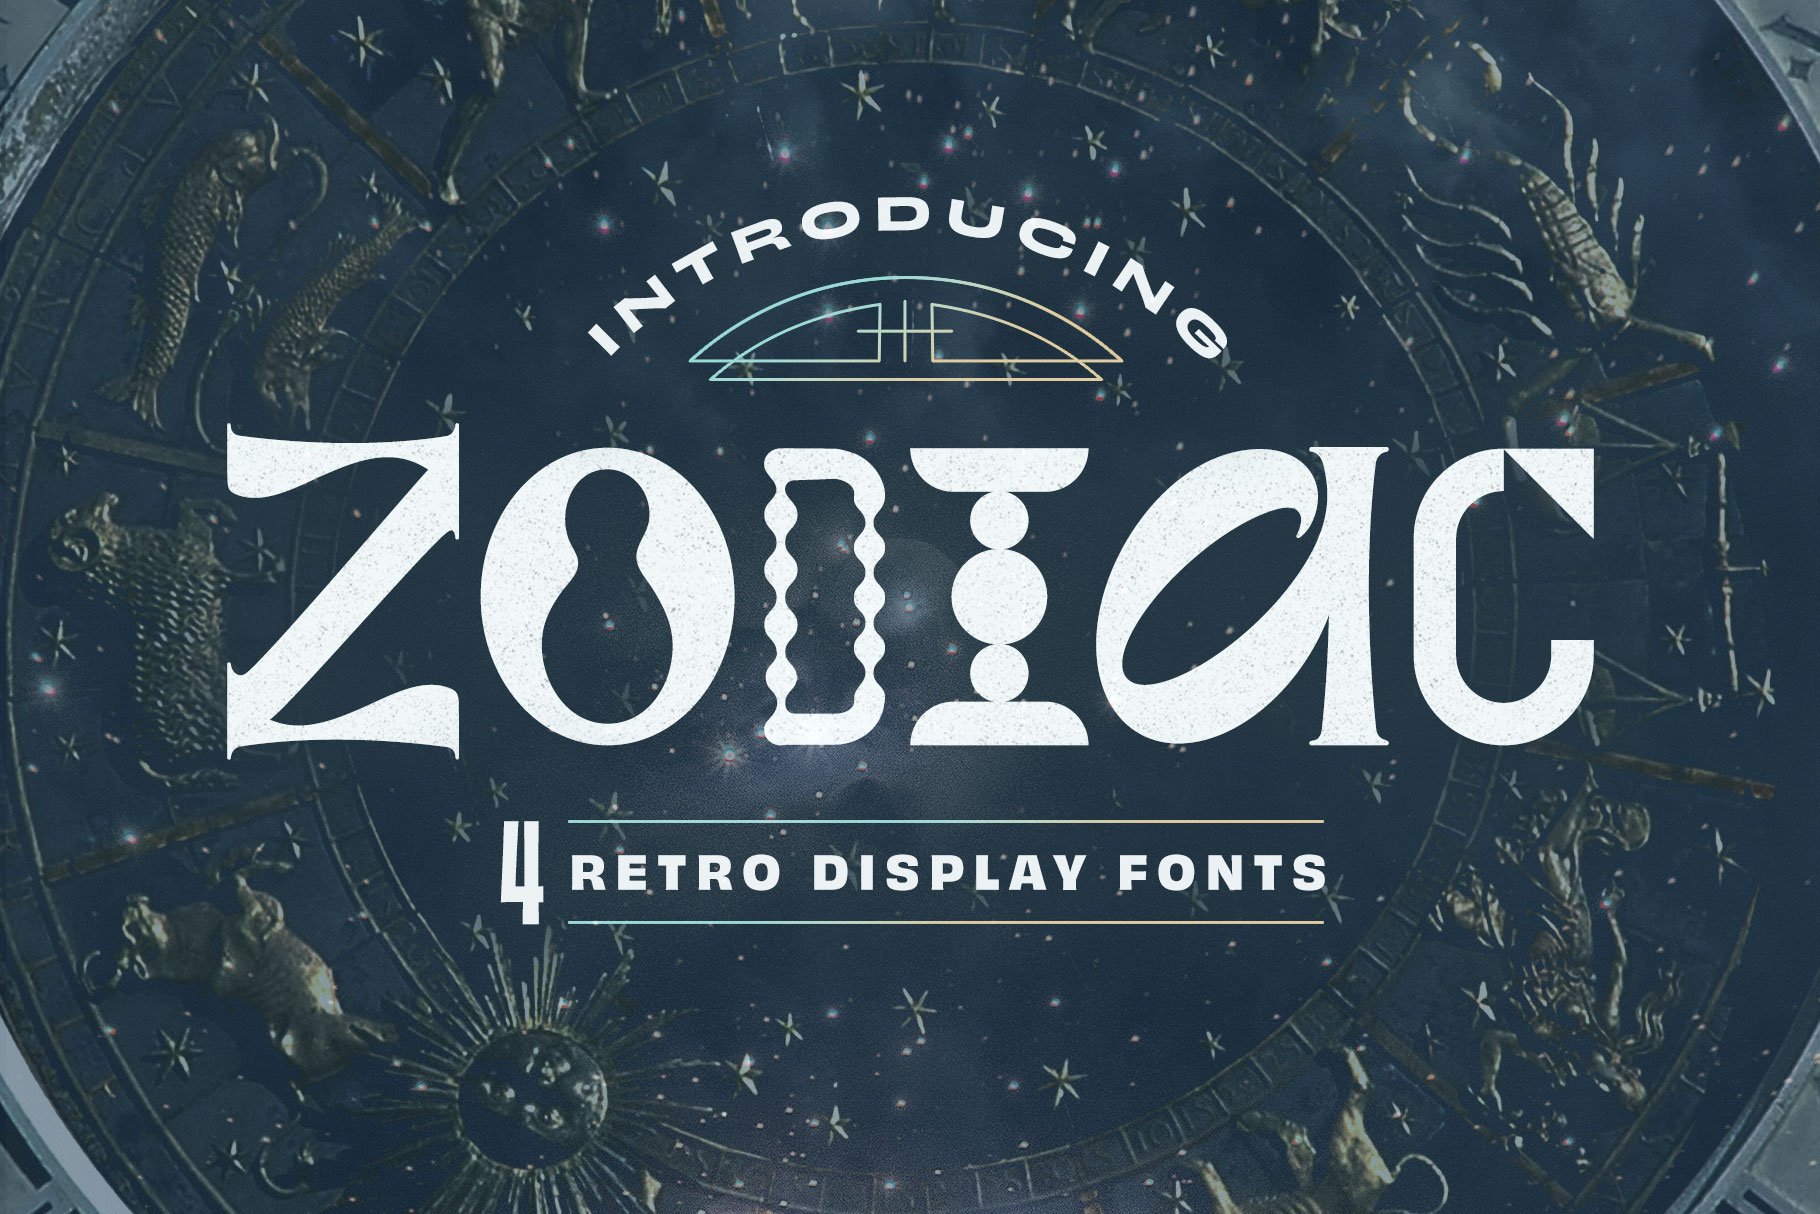 Zodiac - 4 Retro Display Fonts cover image.